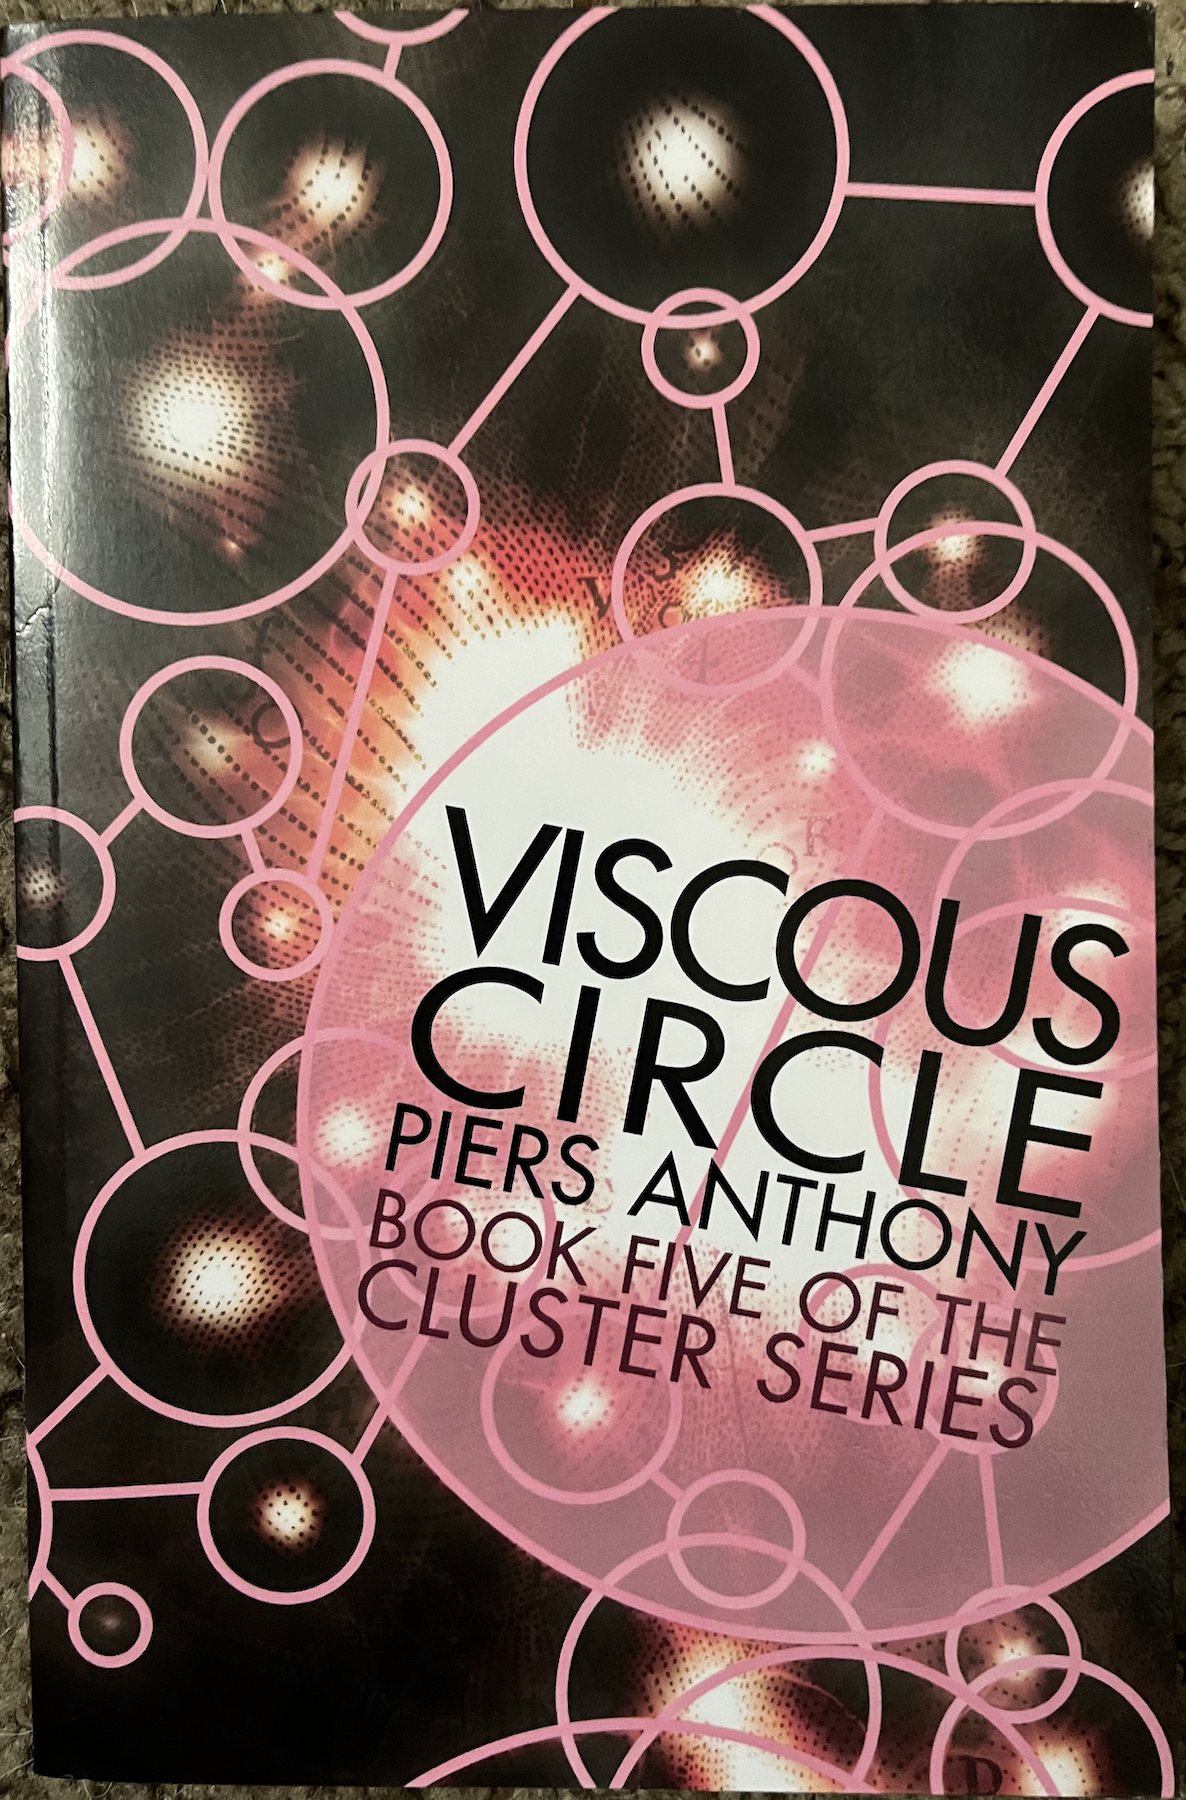 Viscous Circle paperback cover